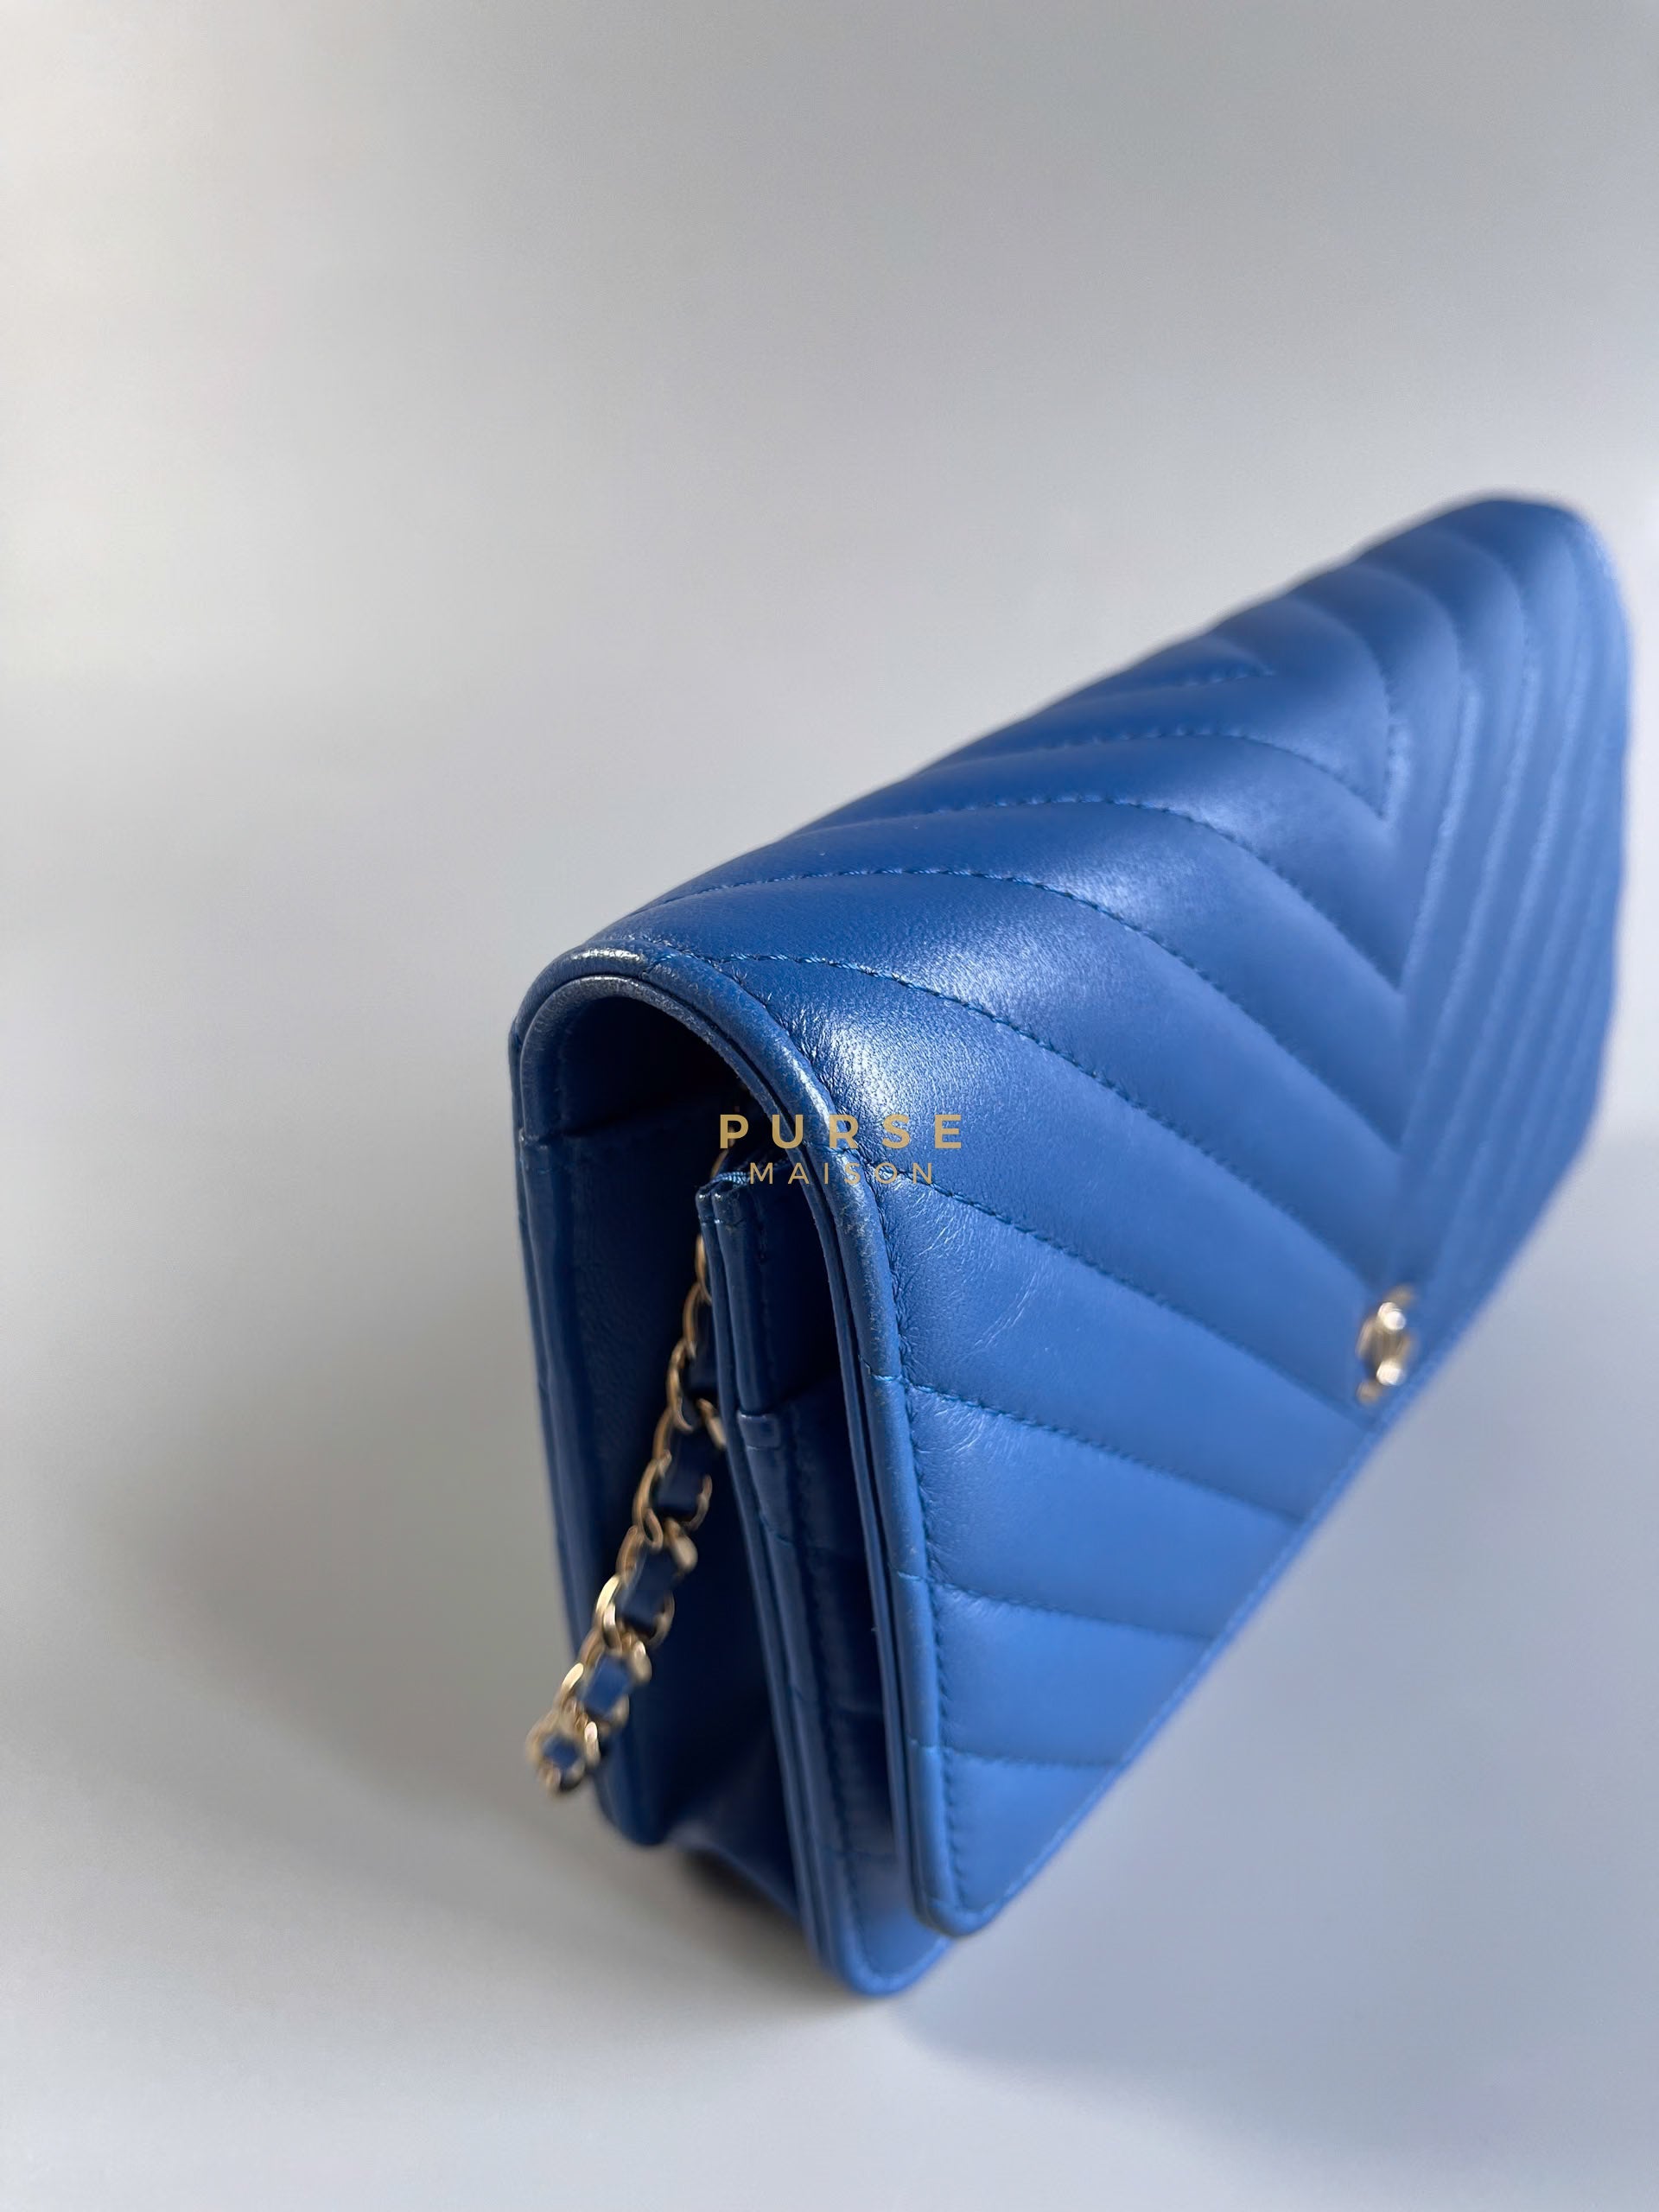 Wallet on Chain Royal Blue Chevron Lambskin & Light Gold Hardware Series 27 | Purse Maison Luxury Bags Shop